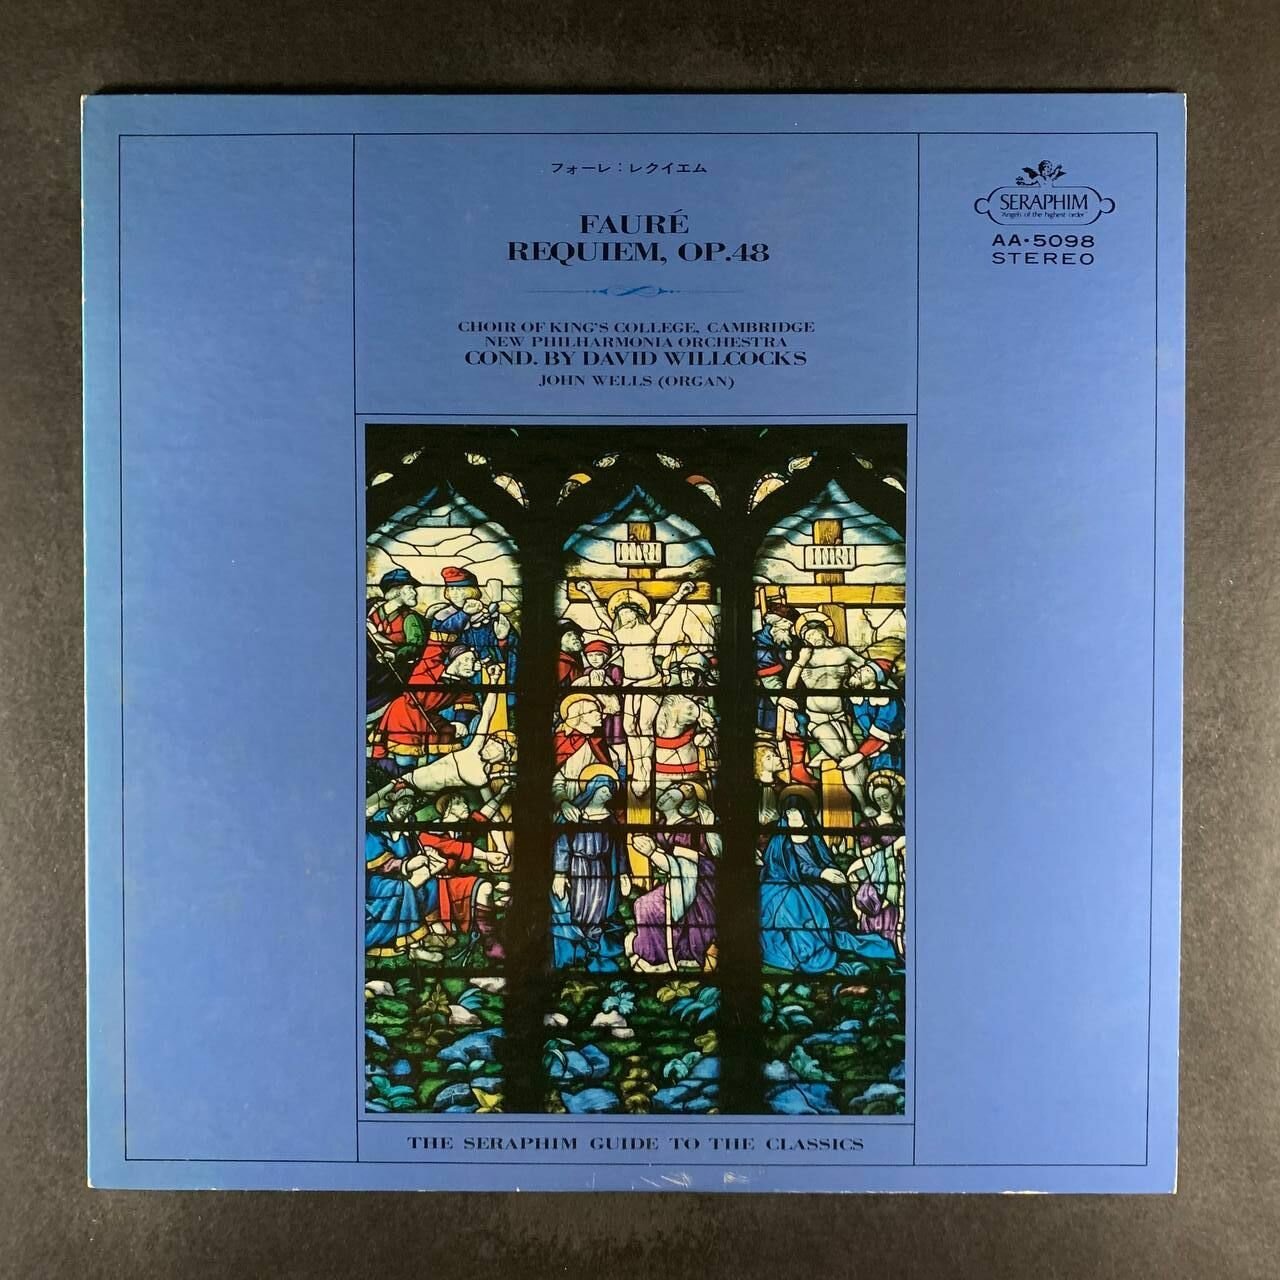 Faure, David Willcocks, John Wells, Choir Of King s College, Cambridge New Pholharmonia Orchestra - Requiem, Op.48 (Виниловая пластинка)